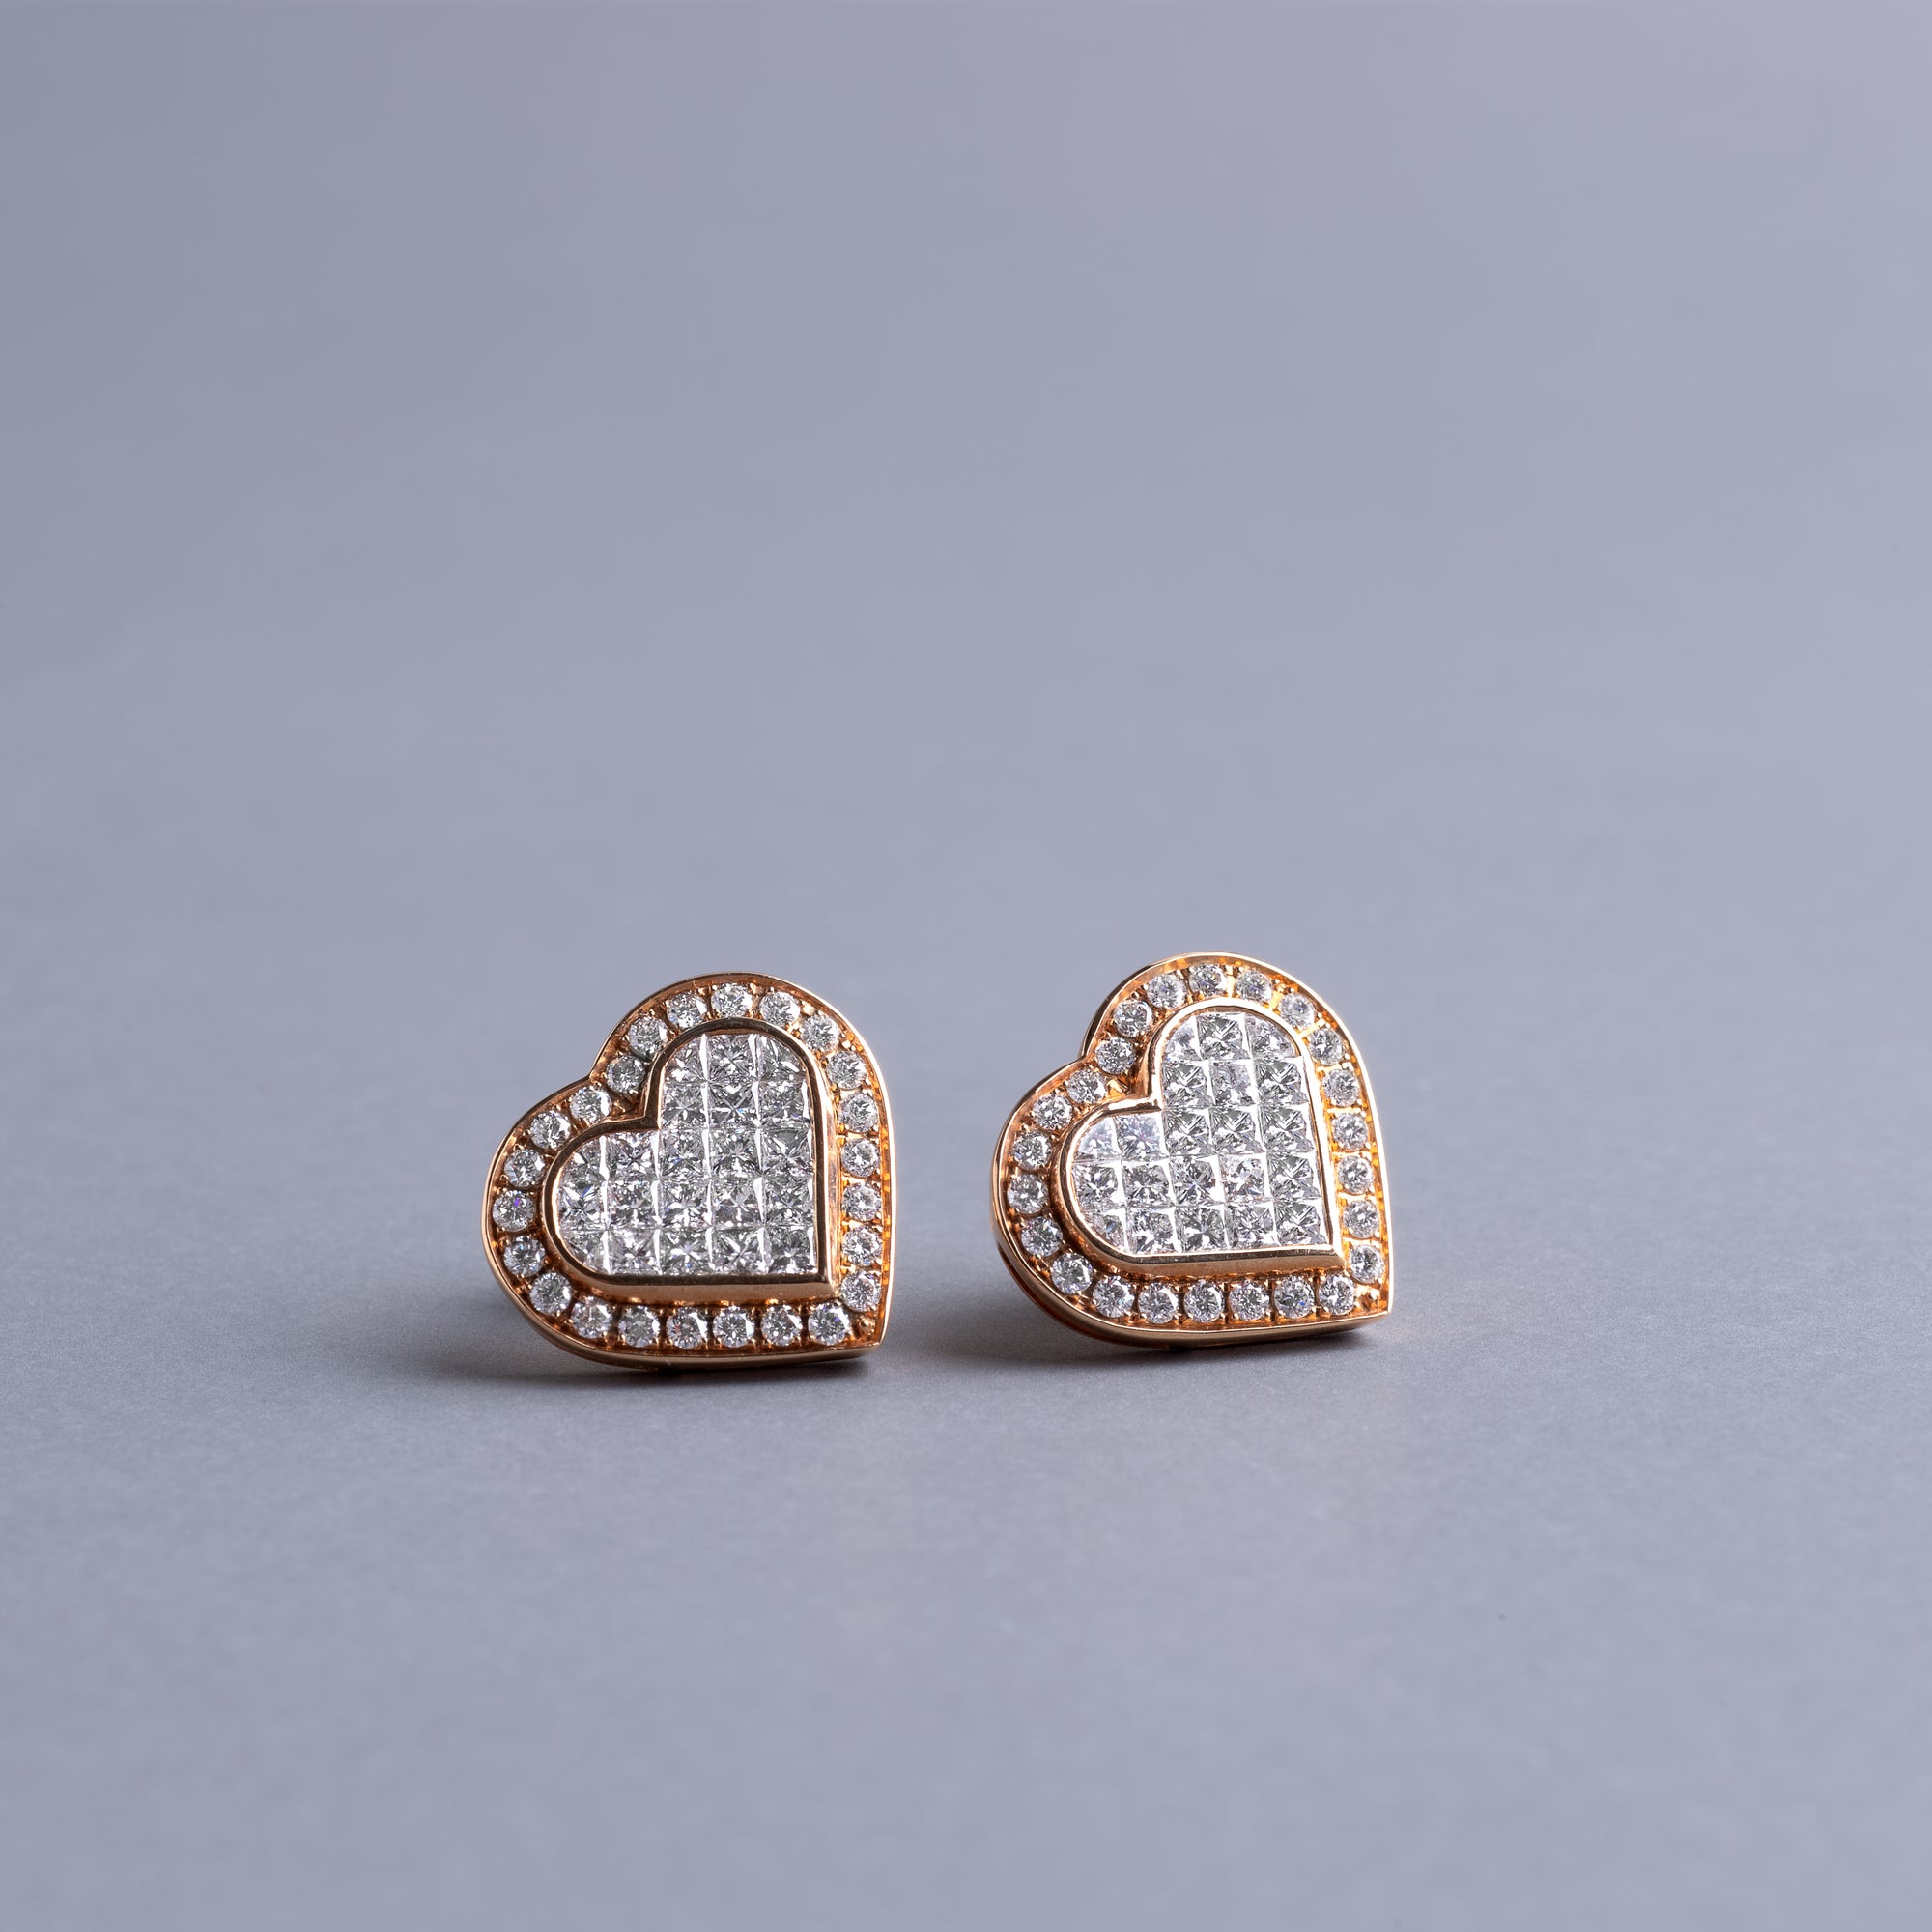 Classic Earrings, Diamond Heart